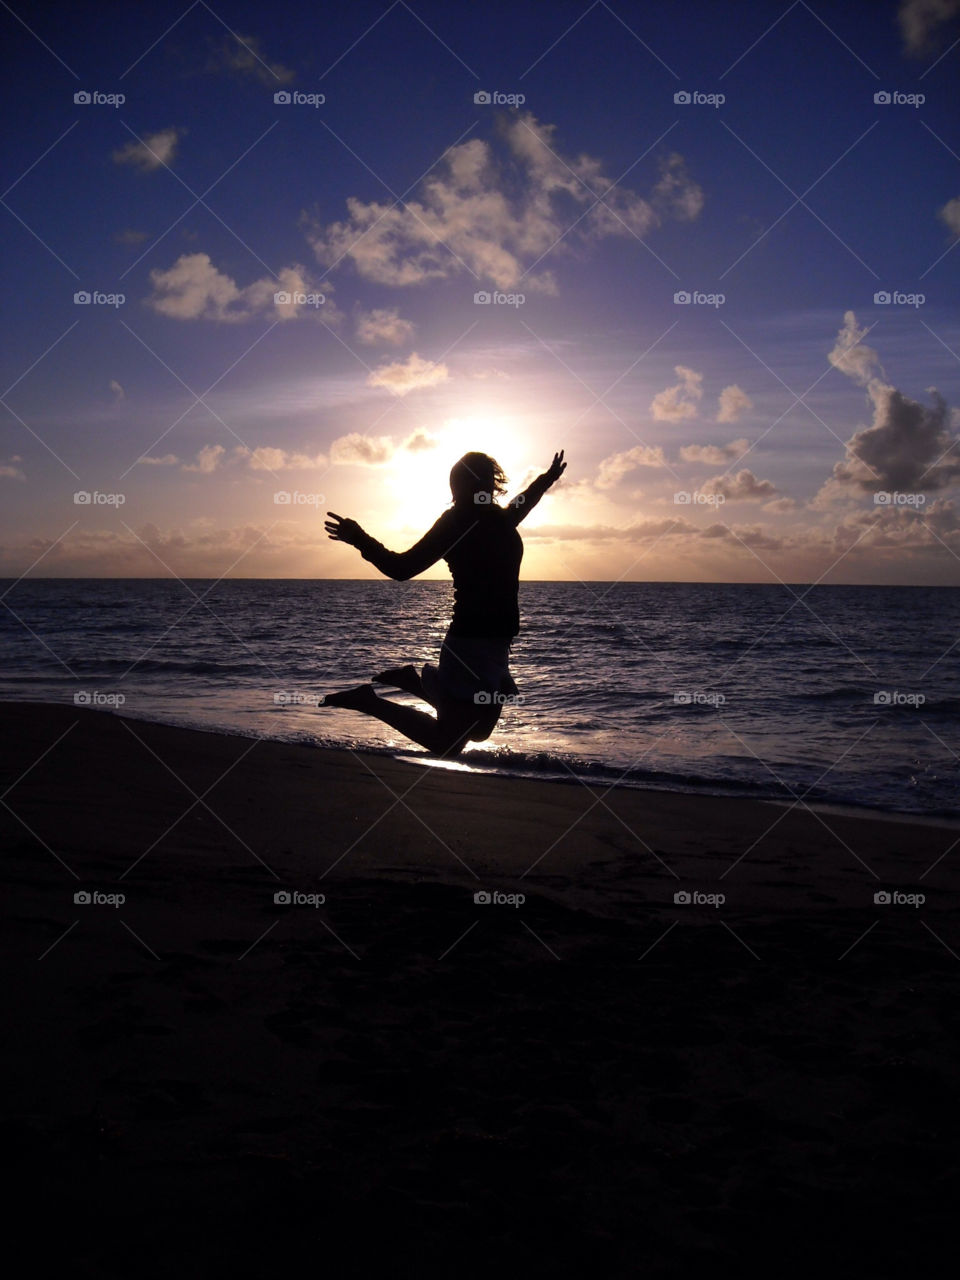 beach sunrise silhouette jump by sergioesteban